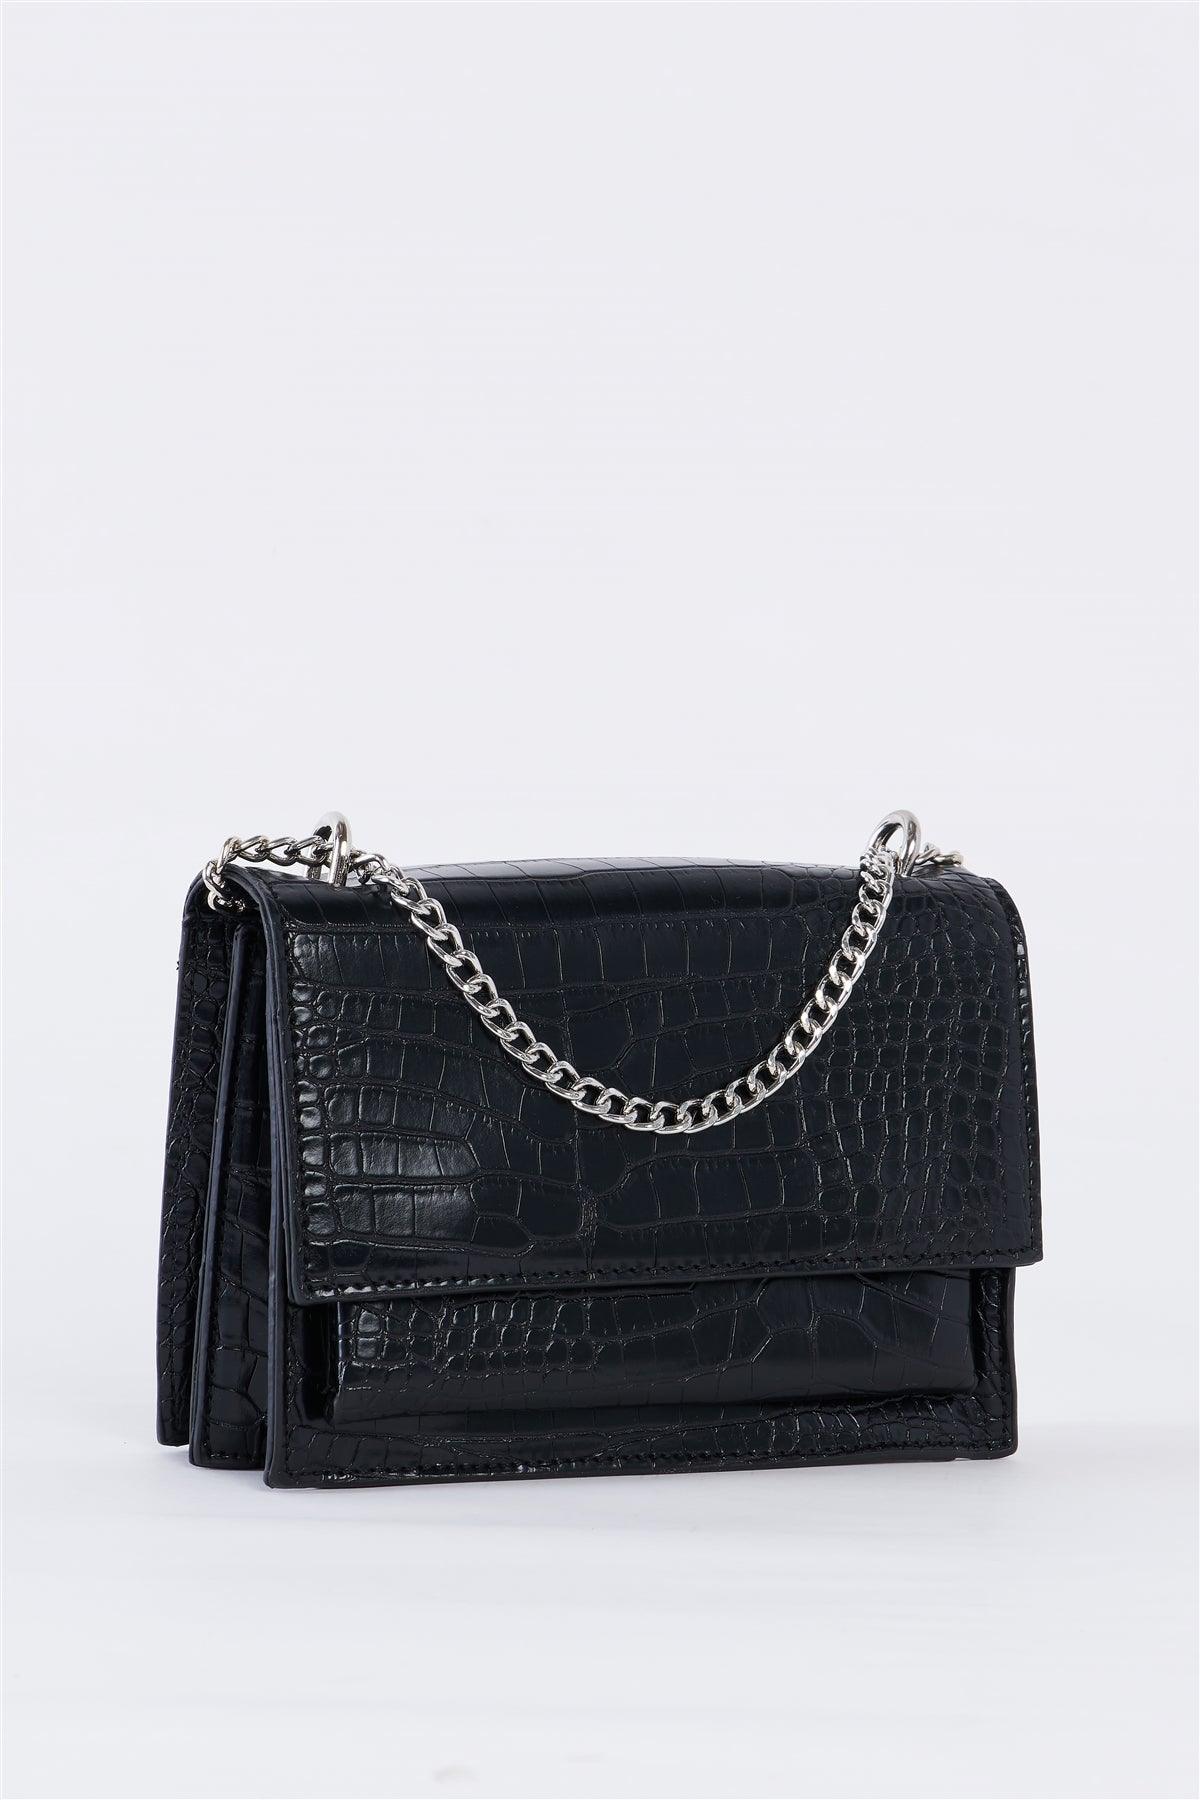 Black Croc Vegan Leather Glamorous Crossbody Chain Bag /3 Bags